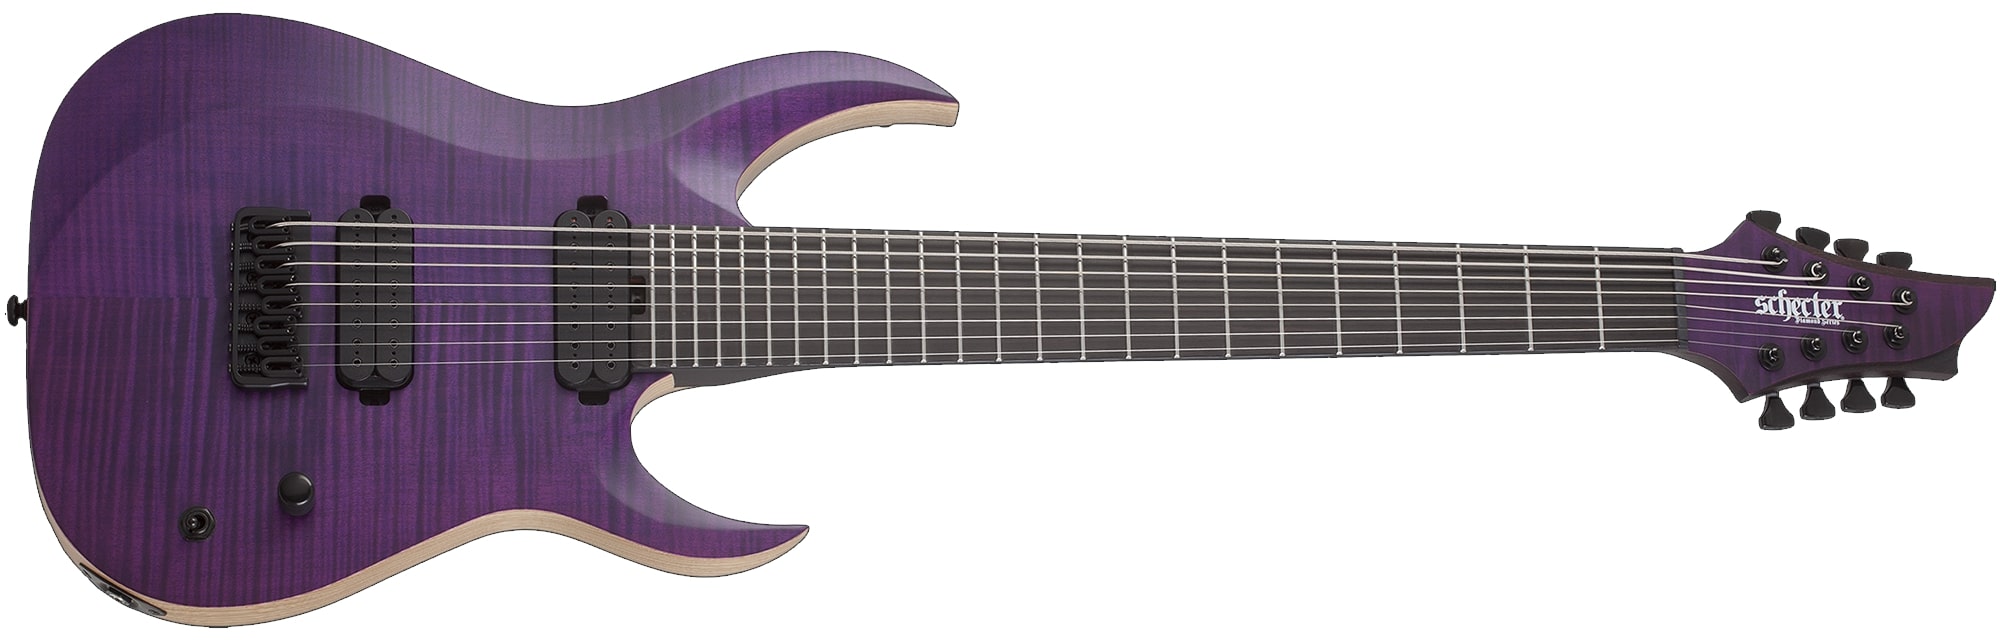 Schecter John Browne Tao-8 8 String Electric Guitar, Satin Trans Purple 464-SHC